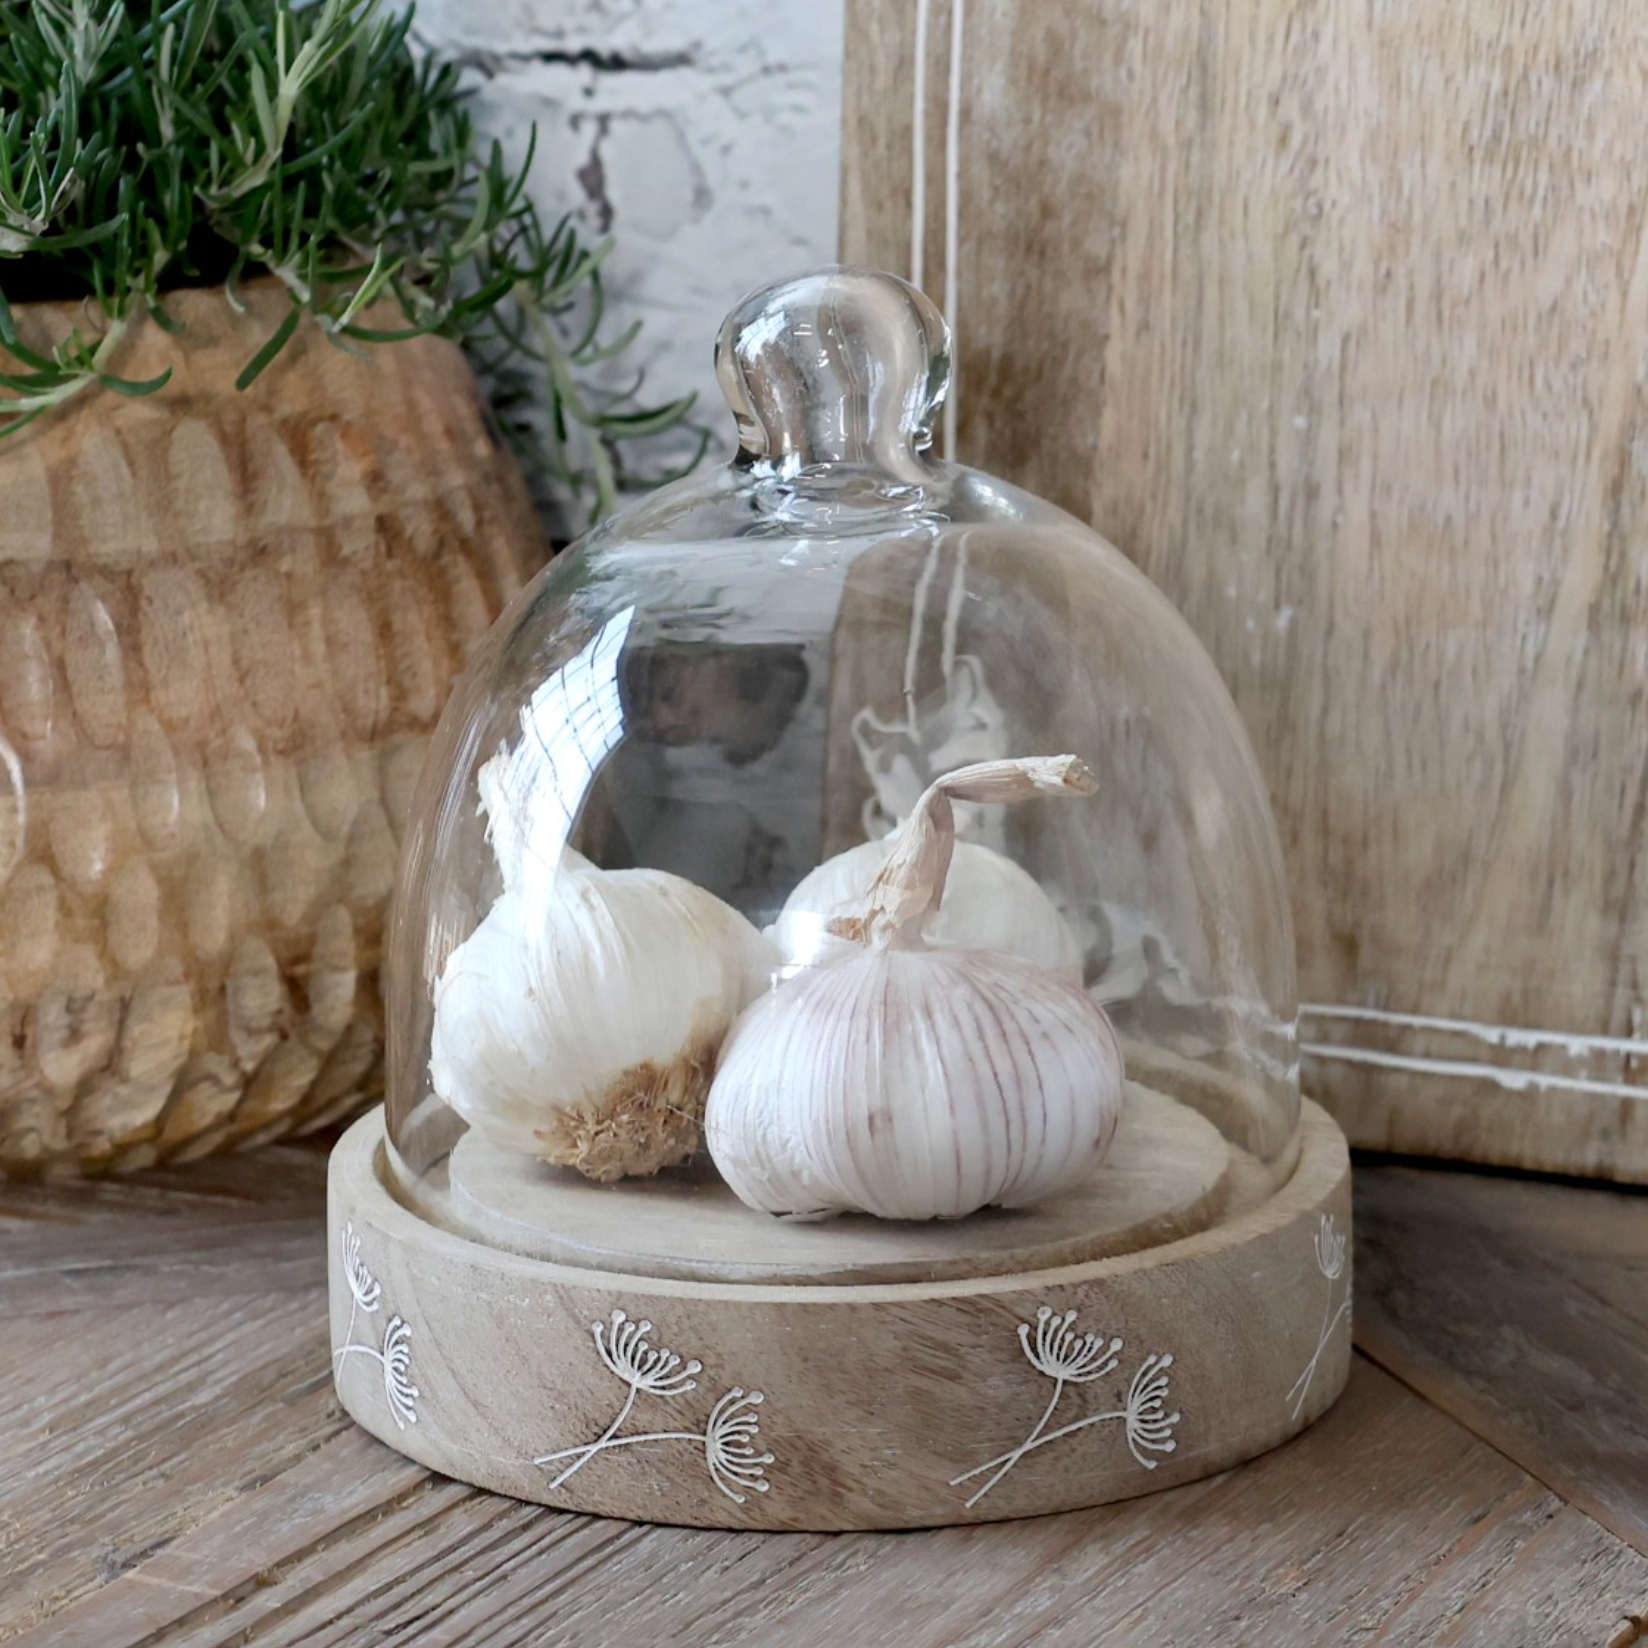 Wood & Glass Cloche with garlic bulbs